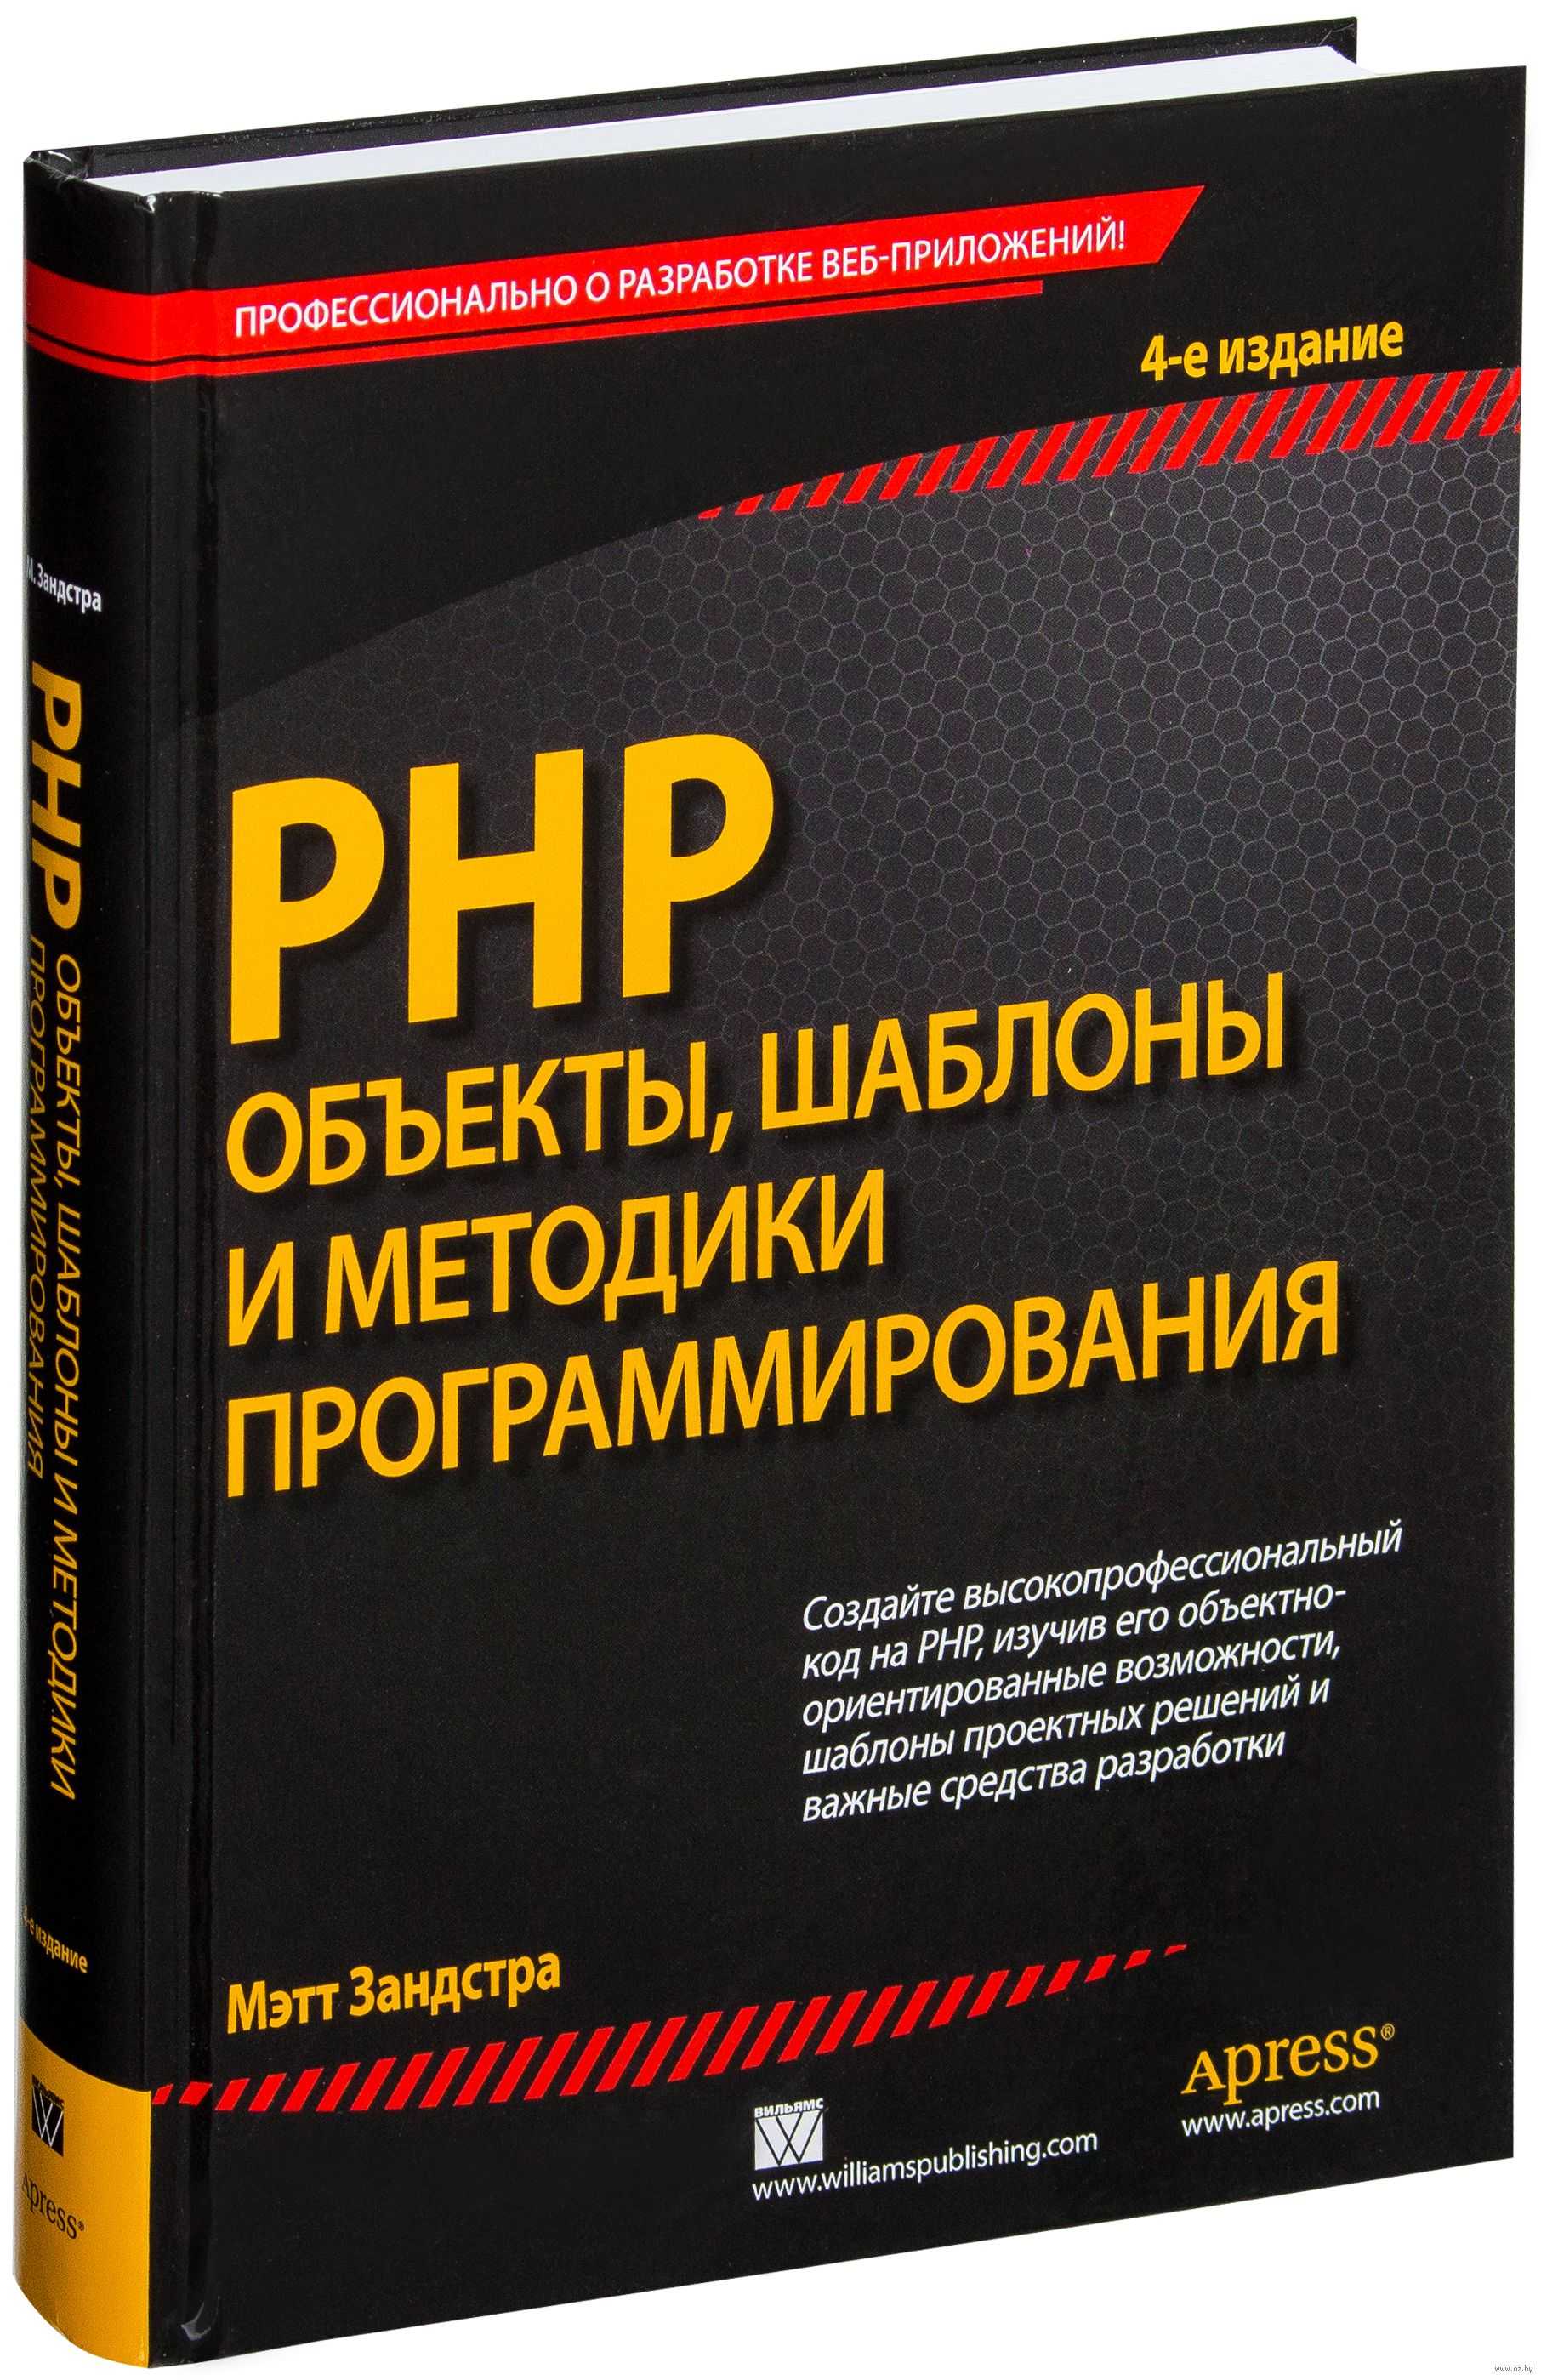 Определение и особенности php — учебник по php — html academy